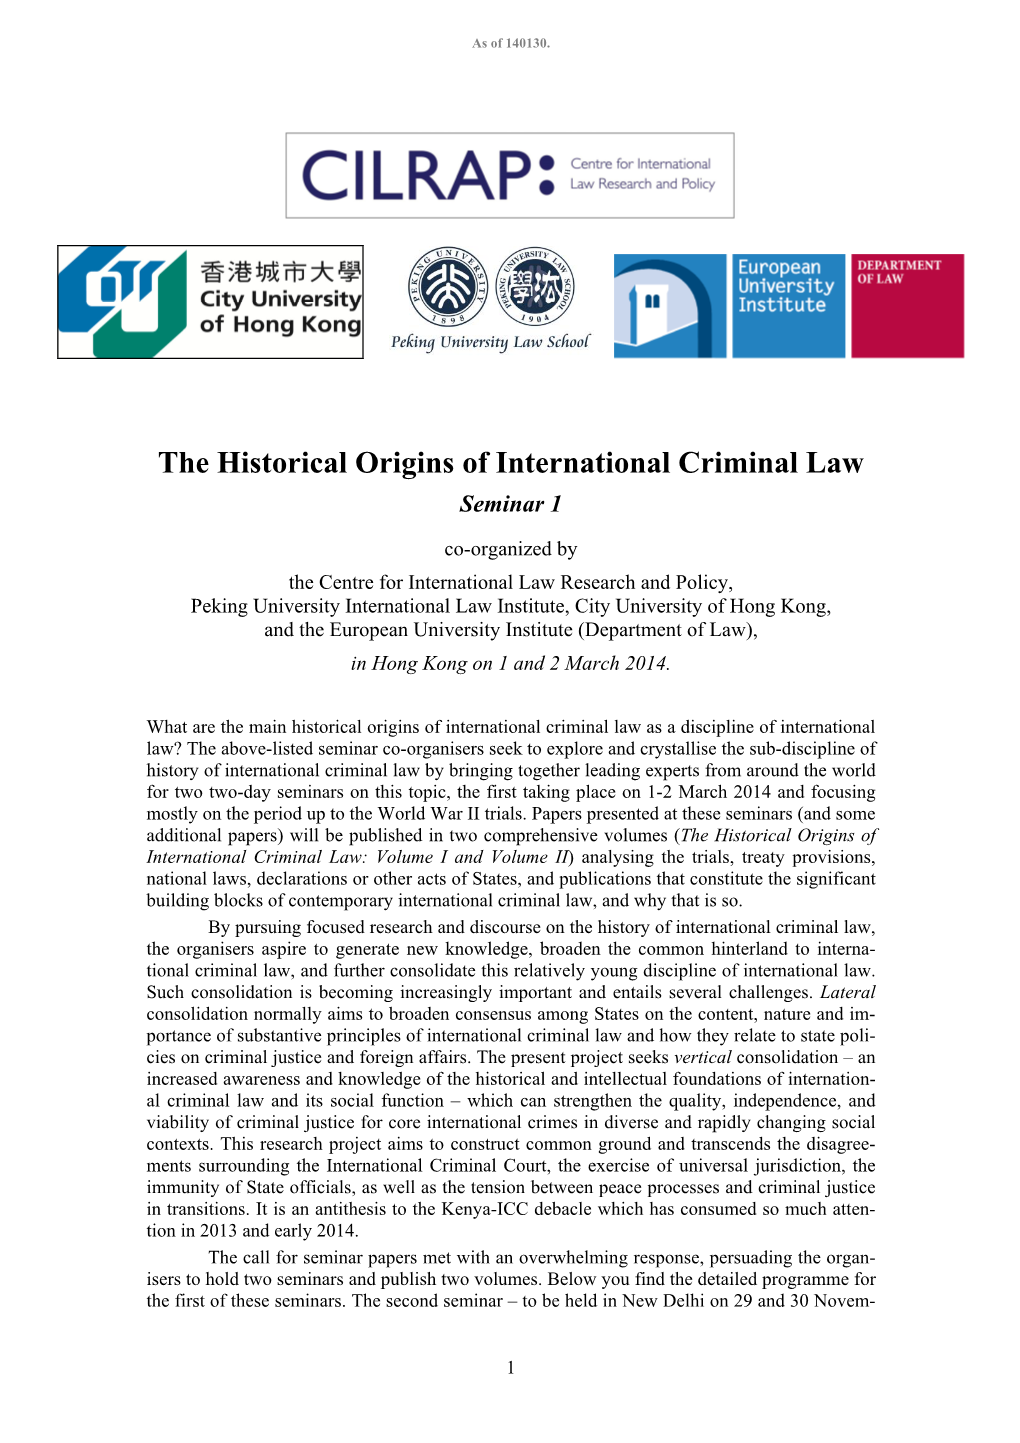 The Historical Origins of International Criminal Law